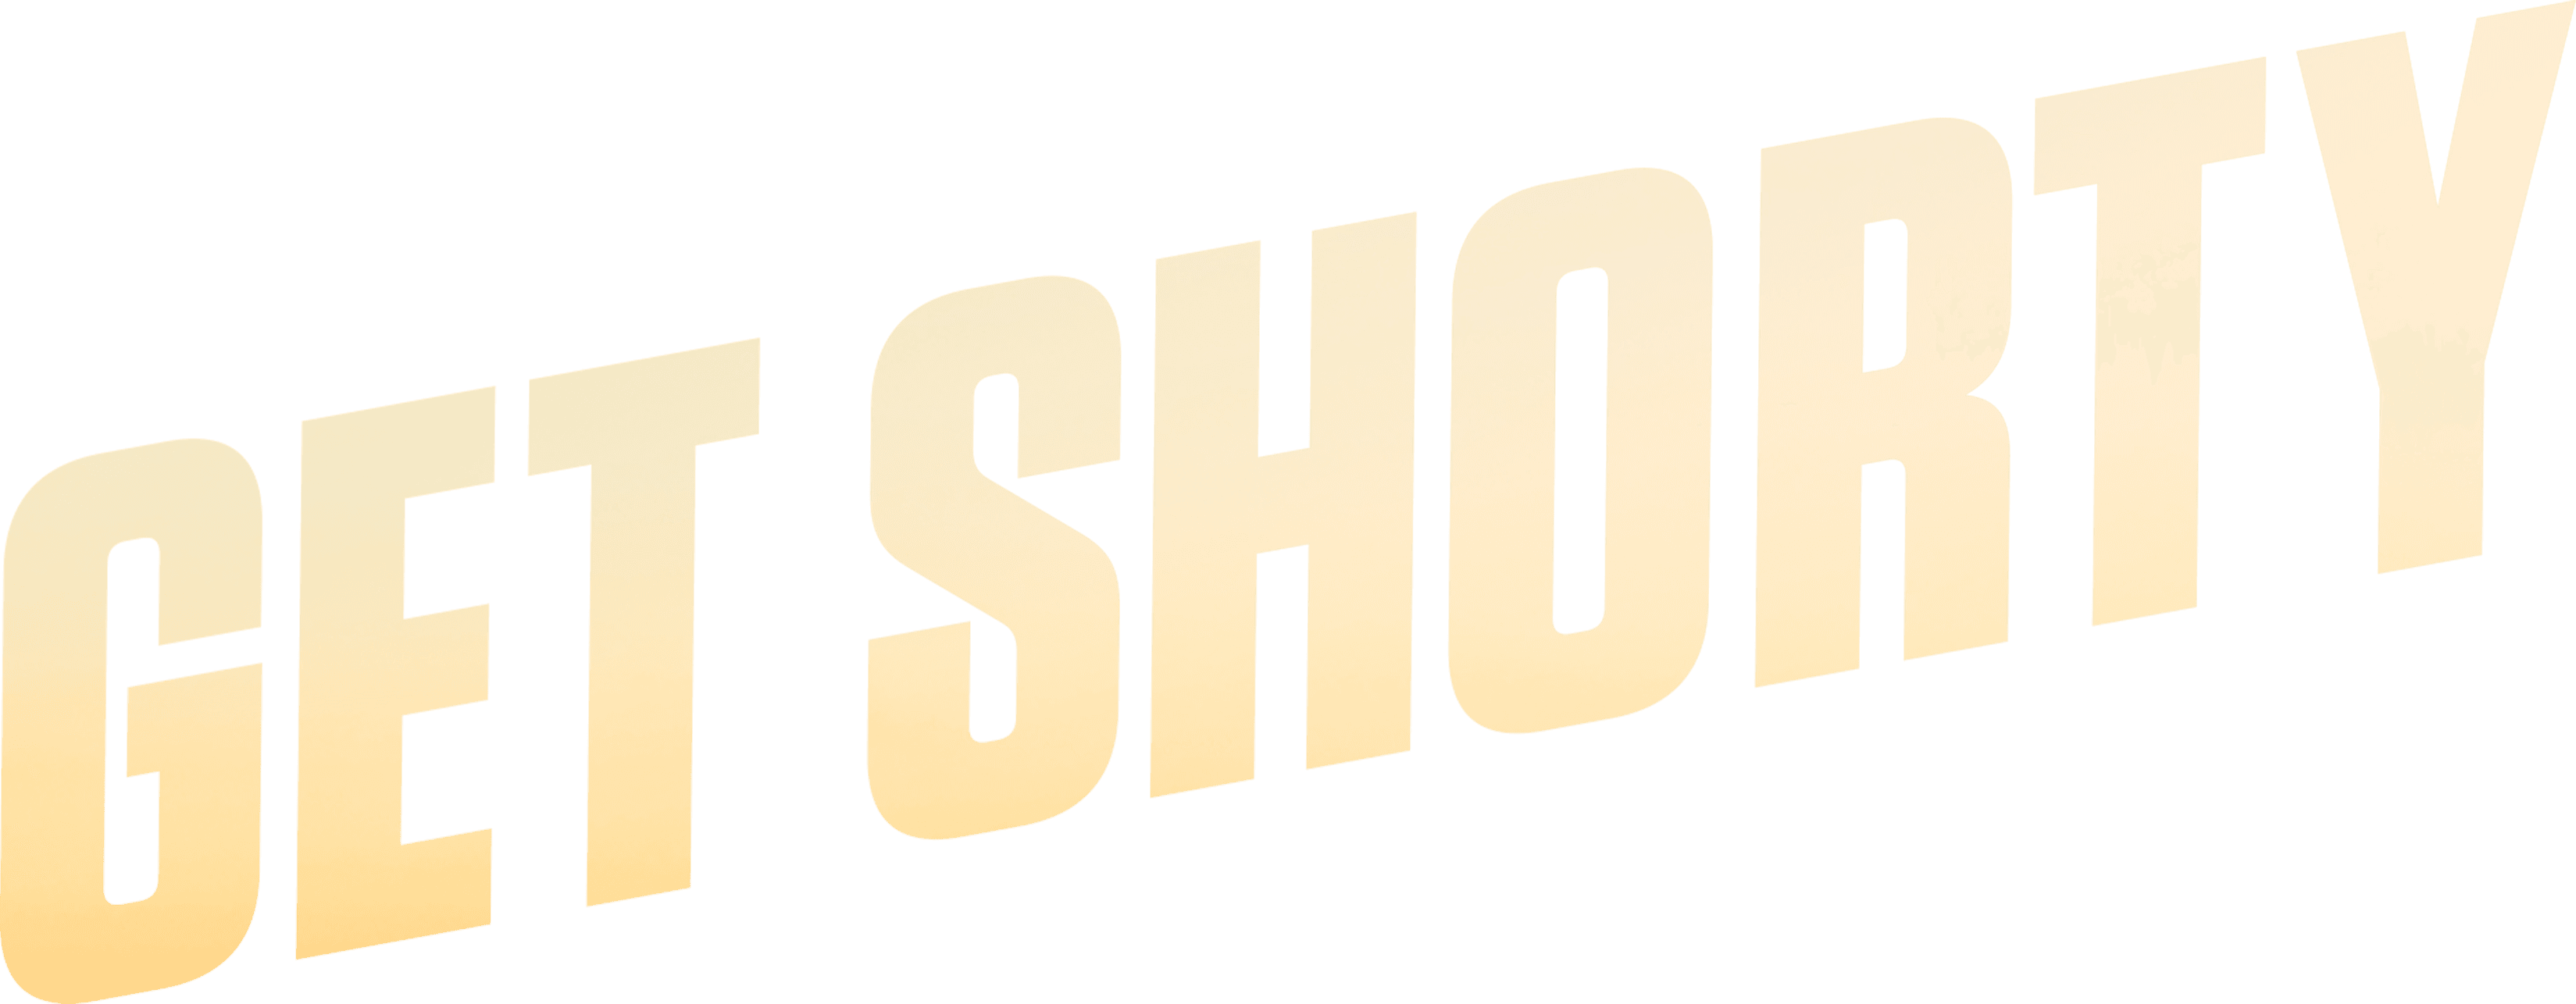 Get Shorty logo